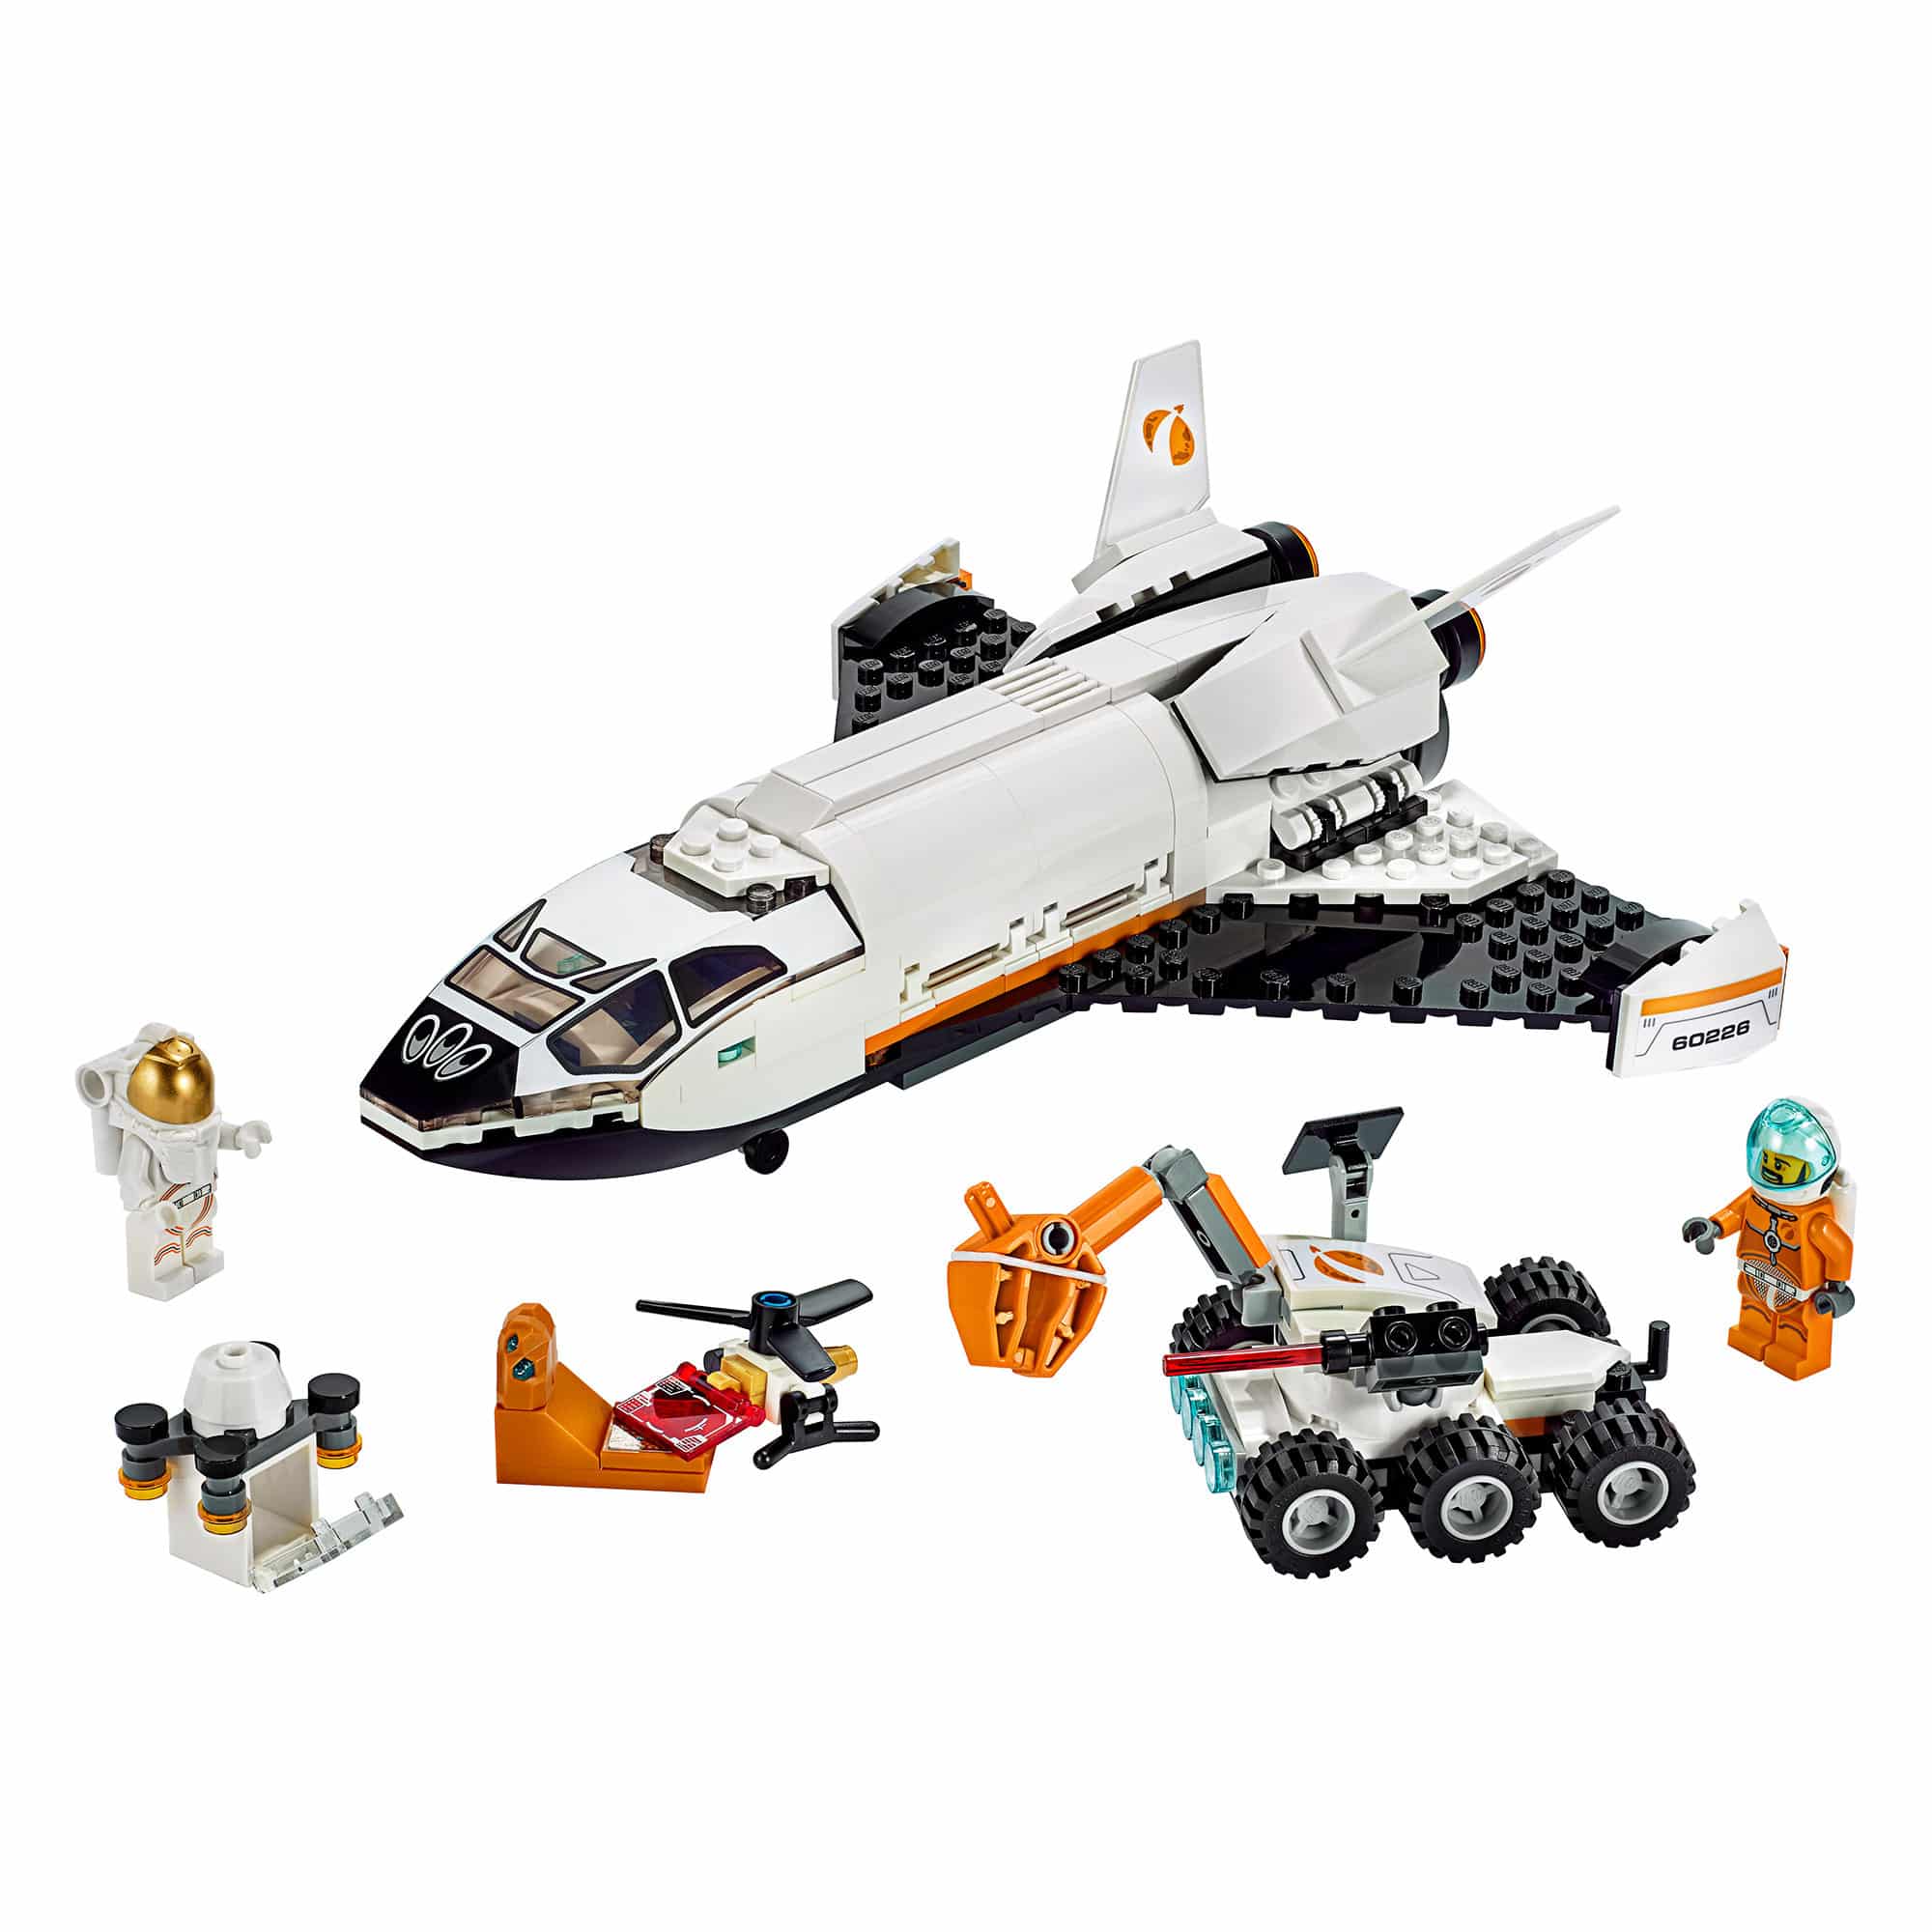 LEGO City - 60226 Mars Research Shuttle